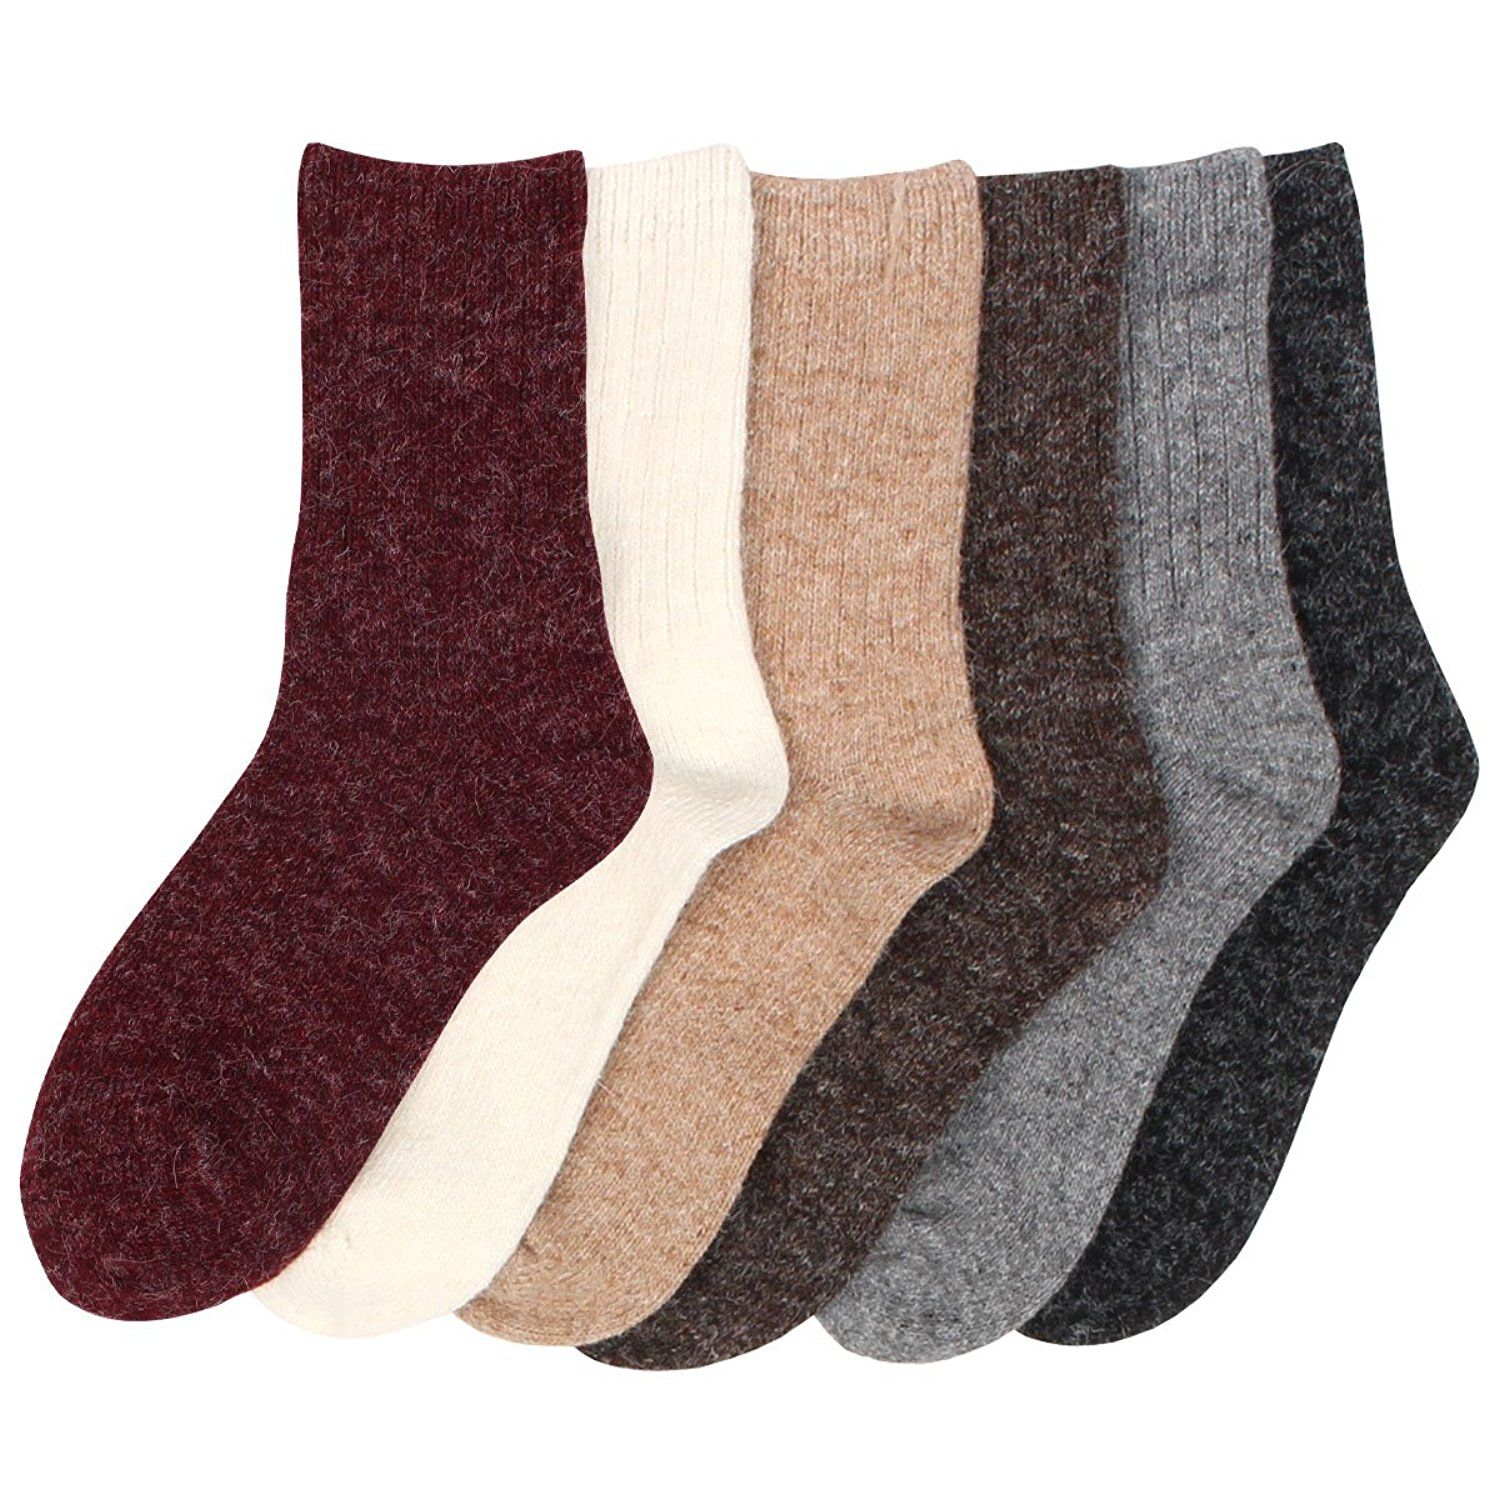 wool socks | like it. | Pinterest | Wool socks and Socks